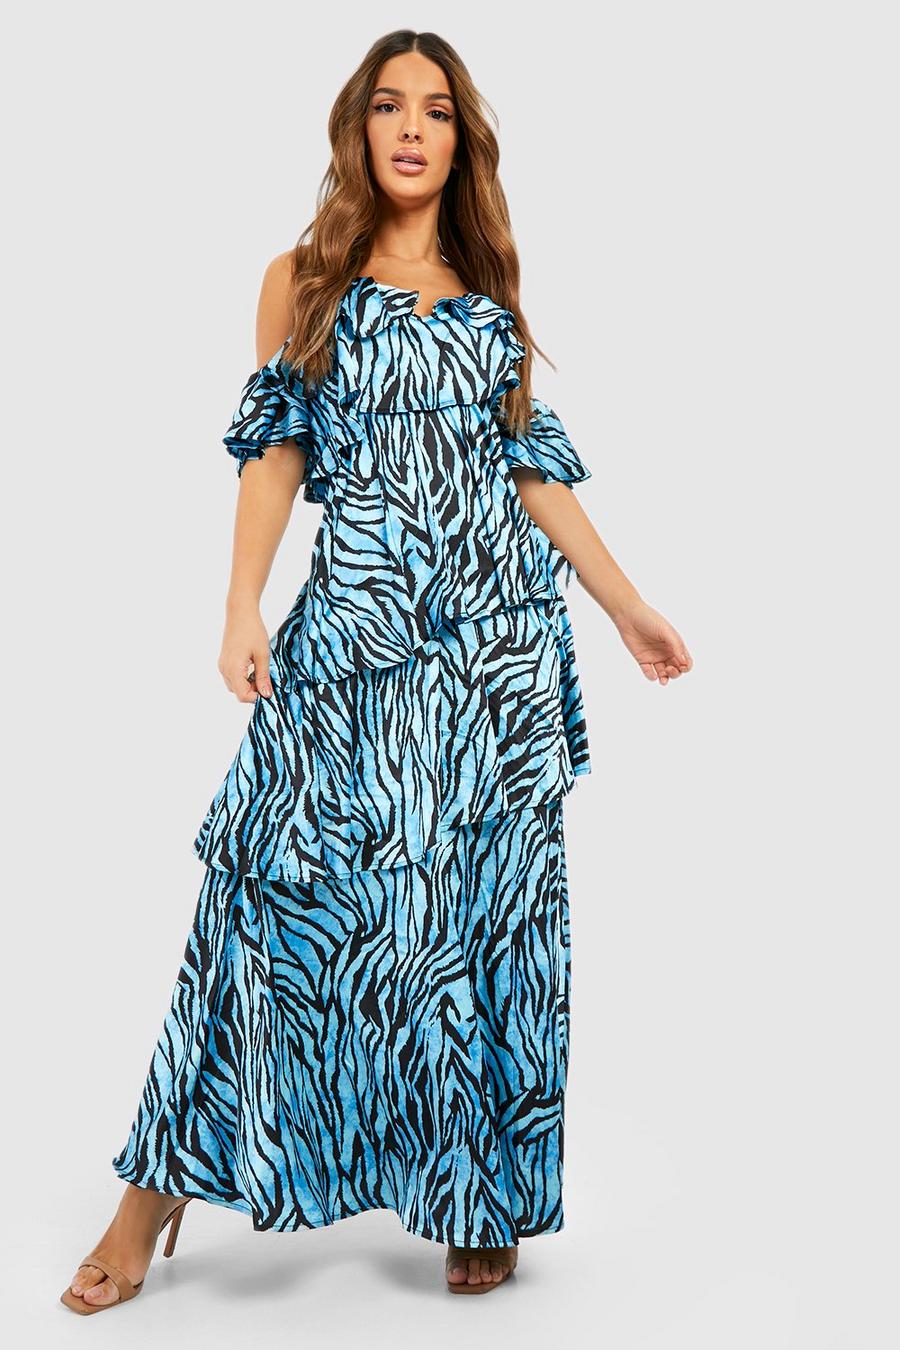 Animal Print Dresses | Leopard Print Dresses | boohoo UK